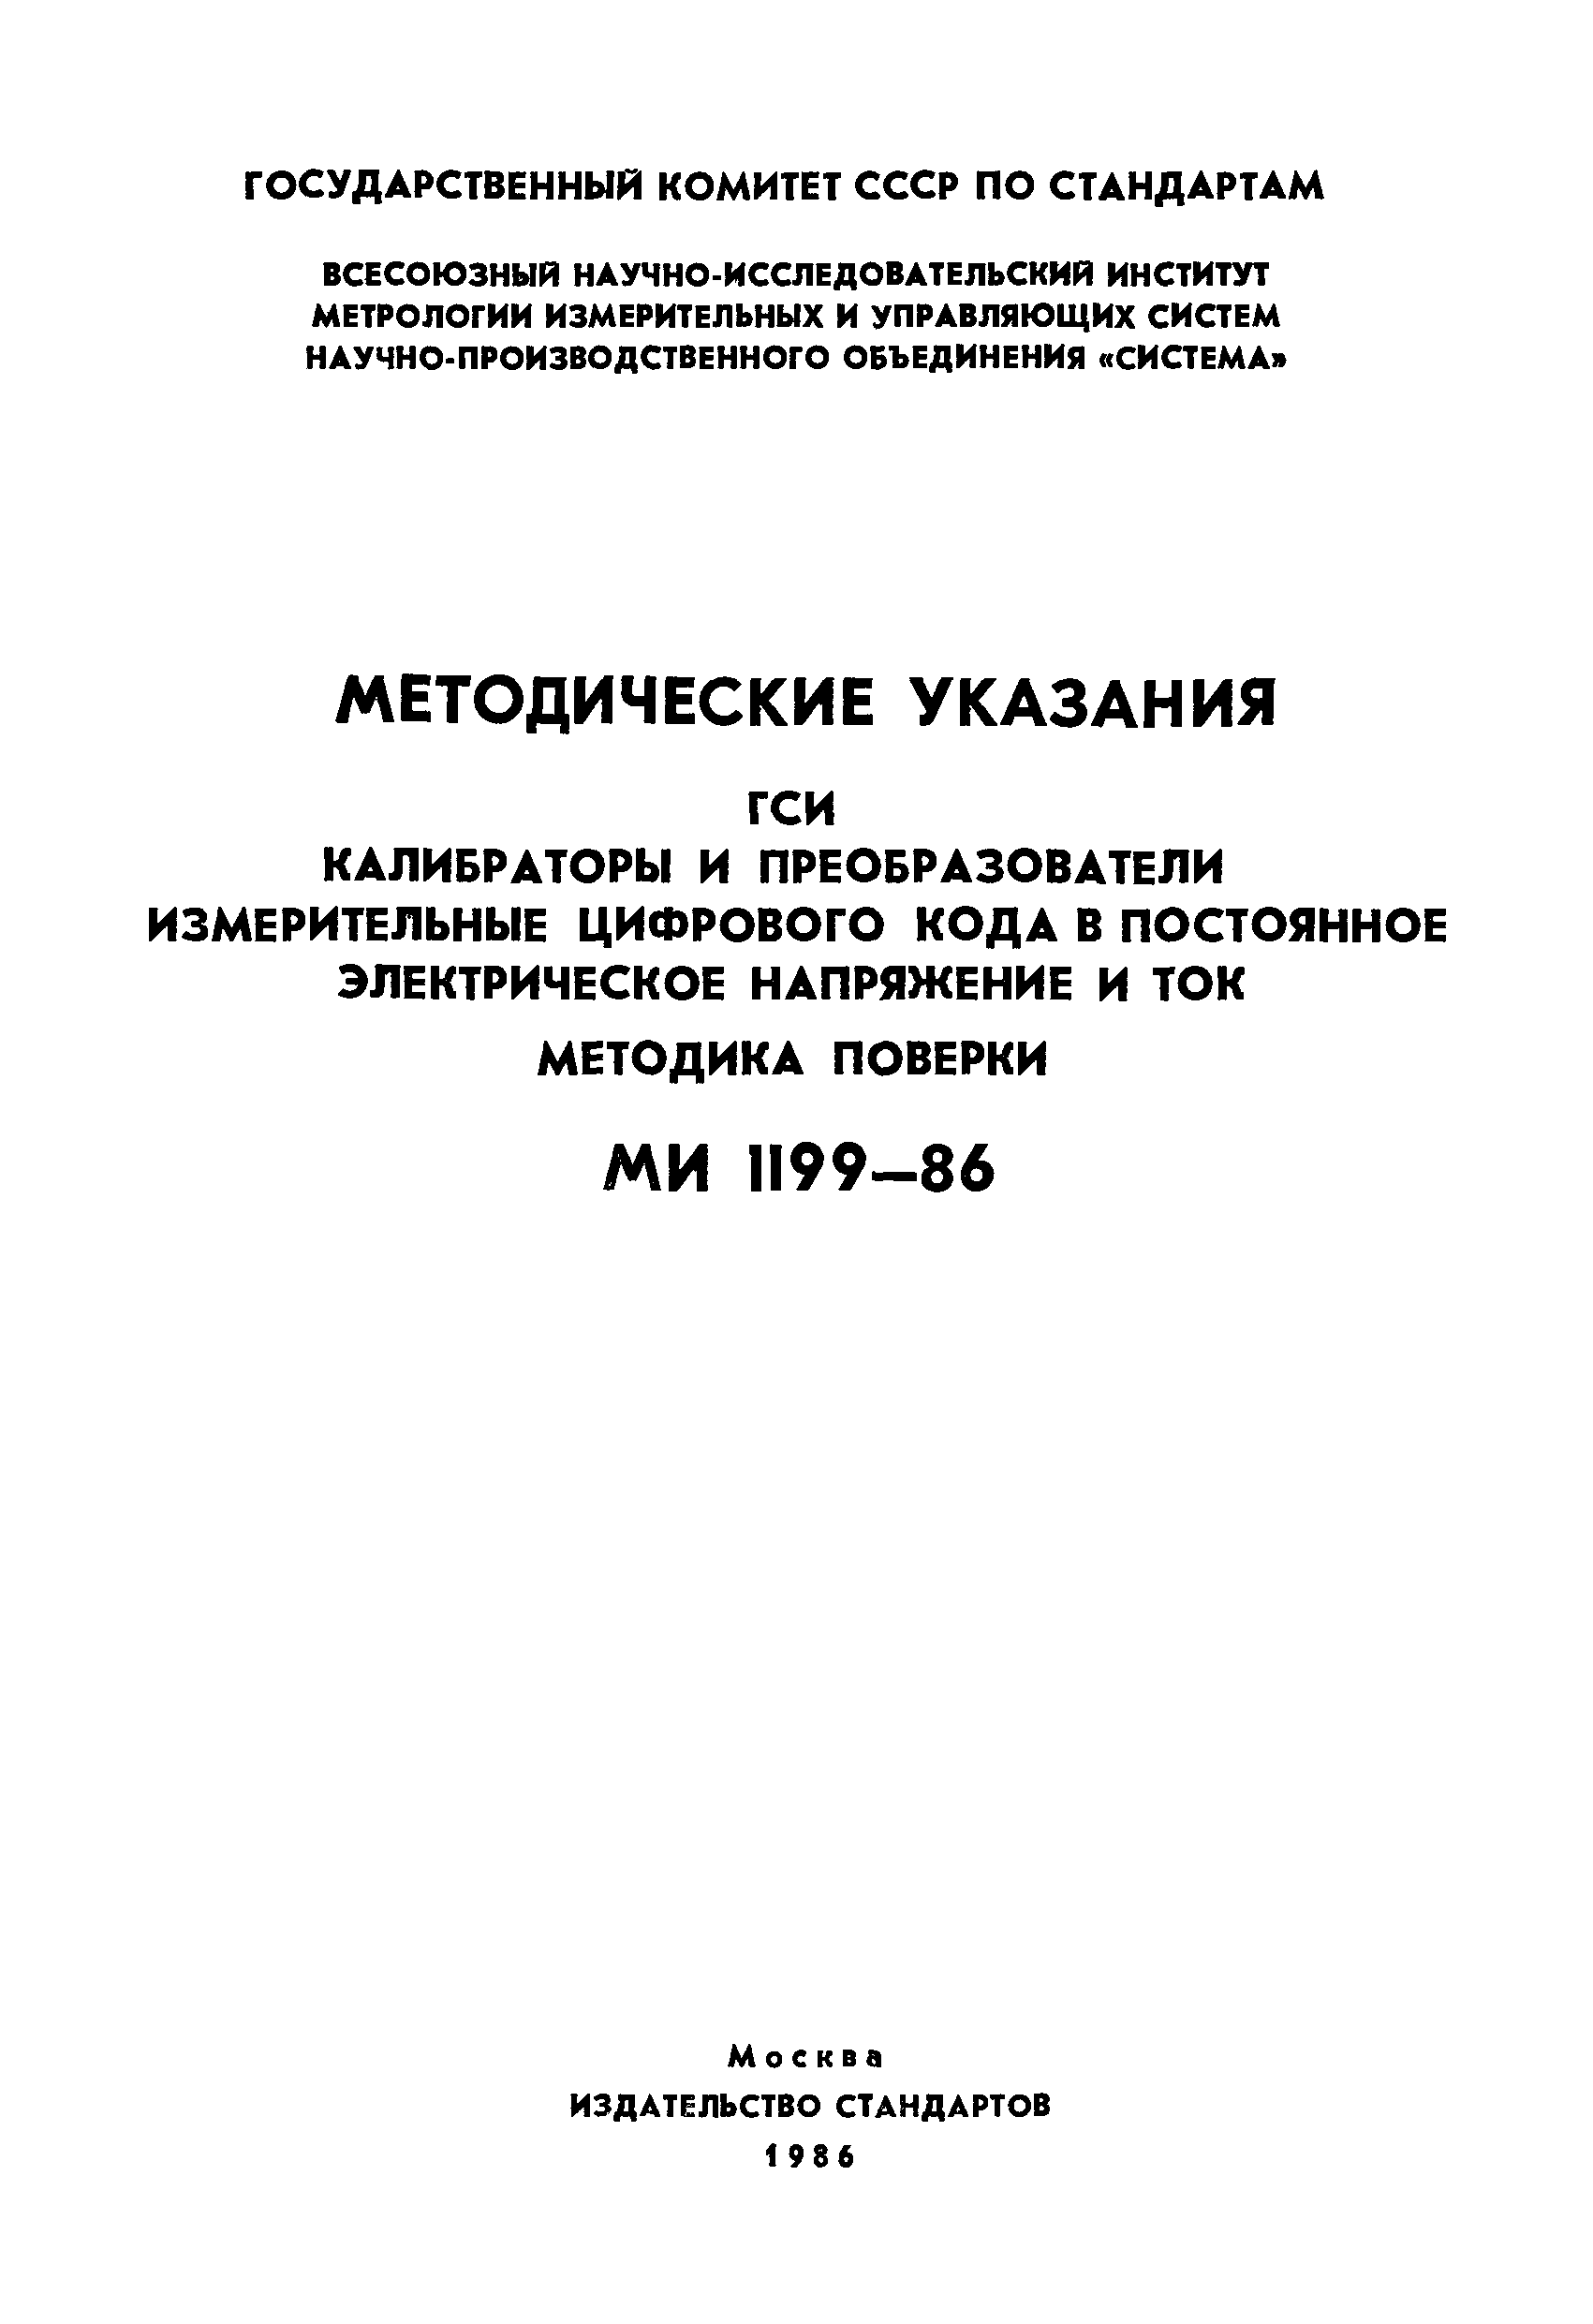 МИ 1199-86